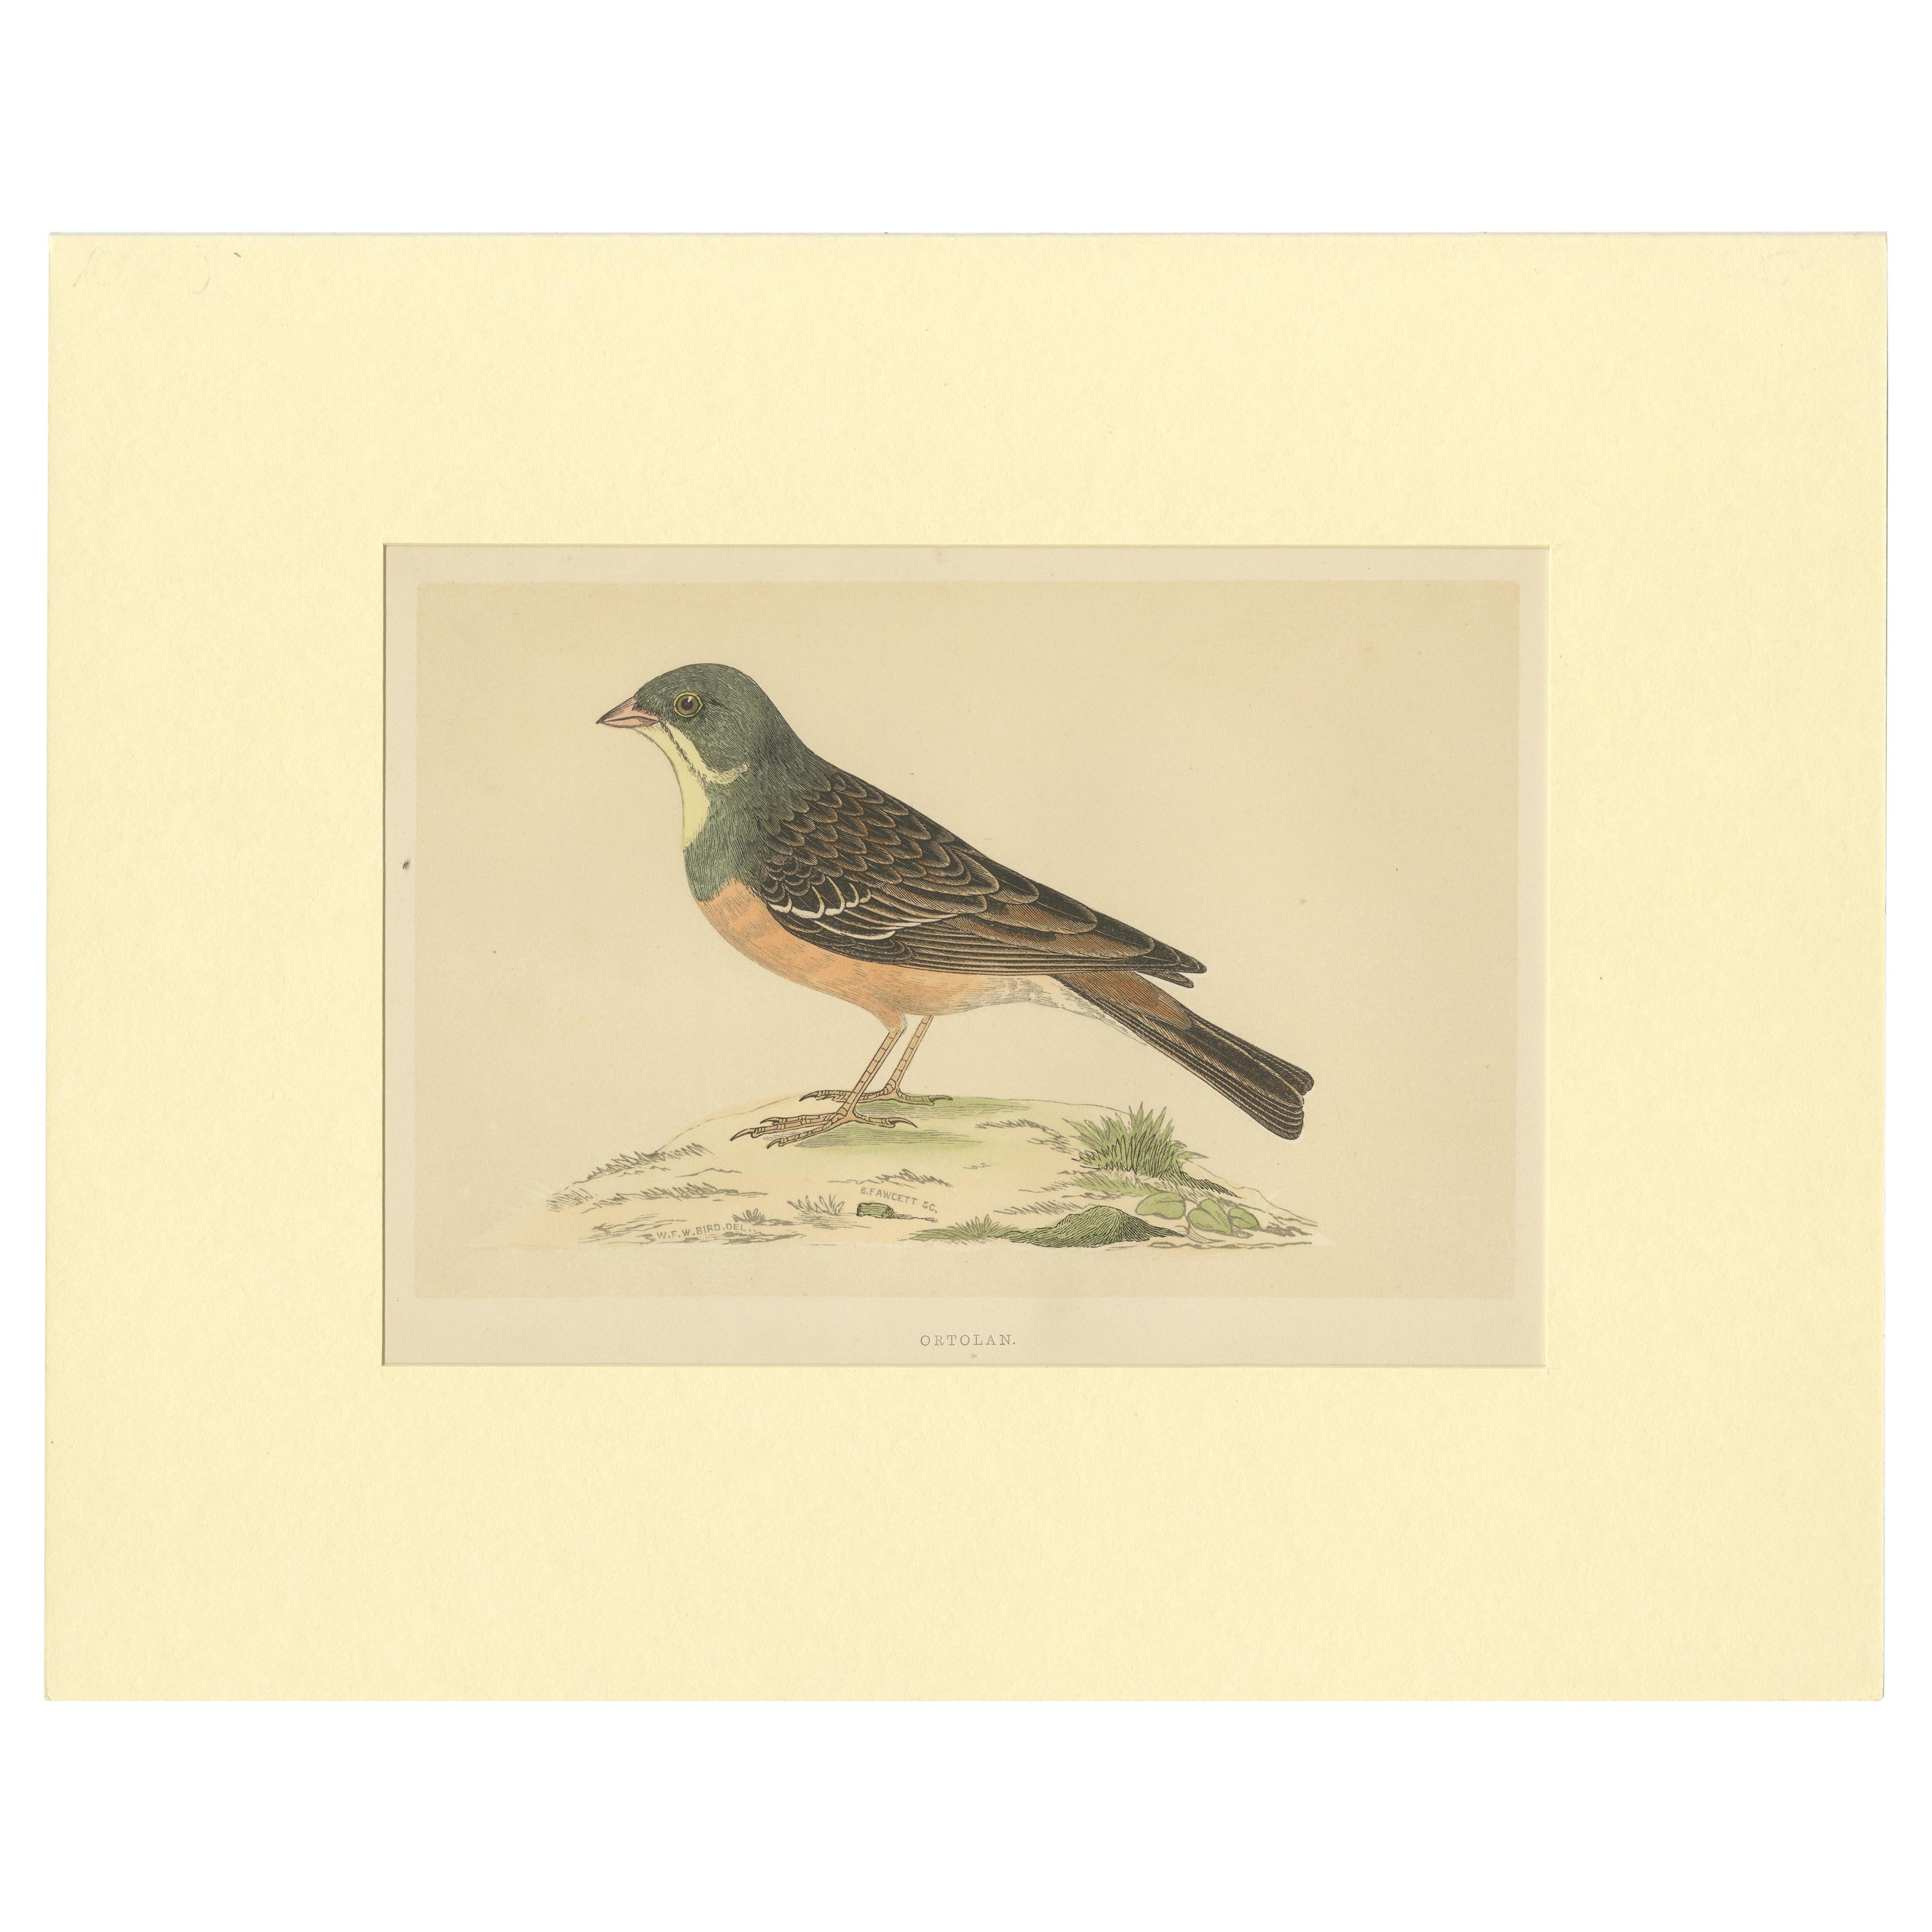 Antique Bird Print of Ortolan For Sale